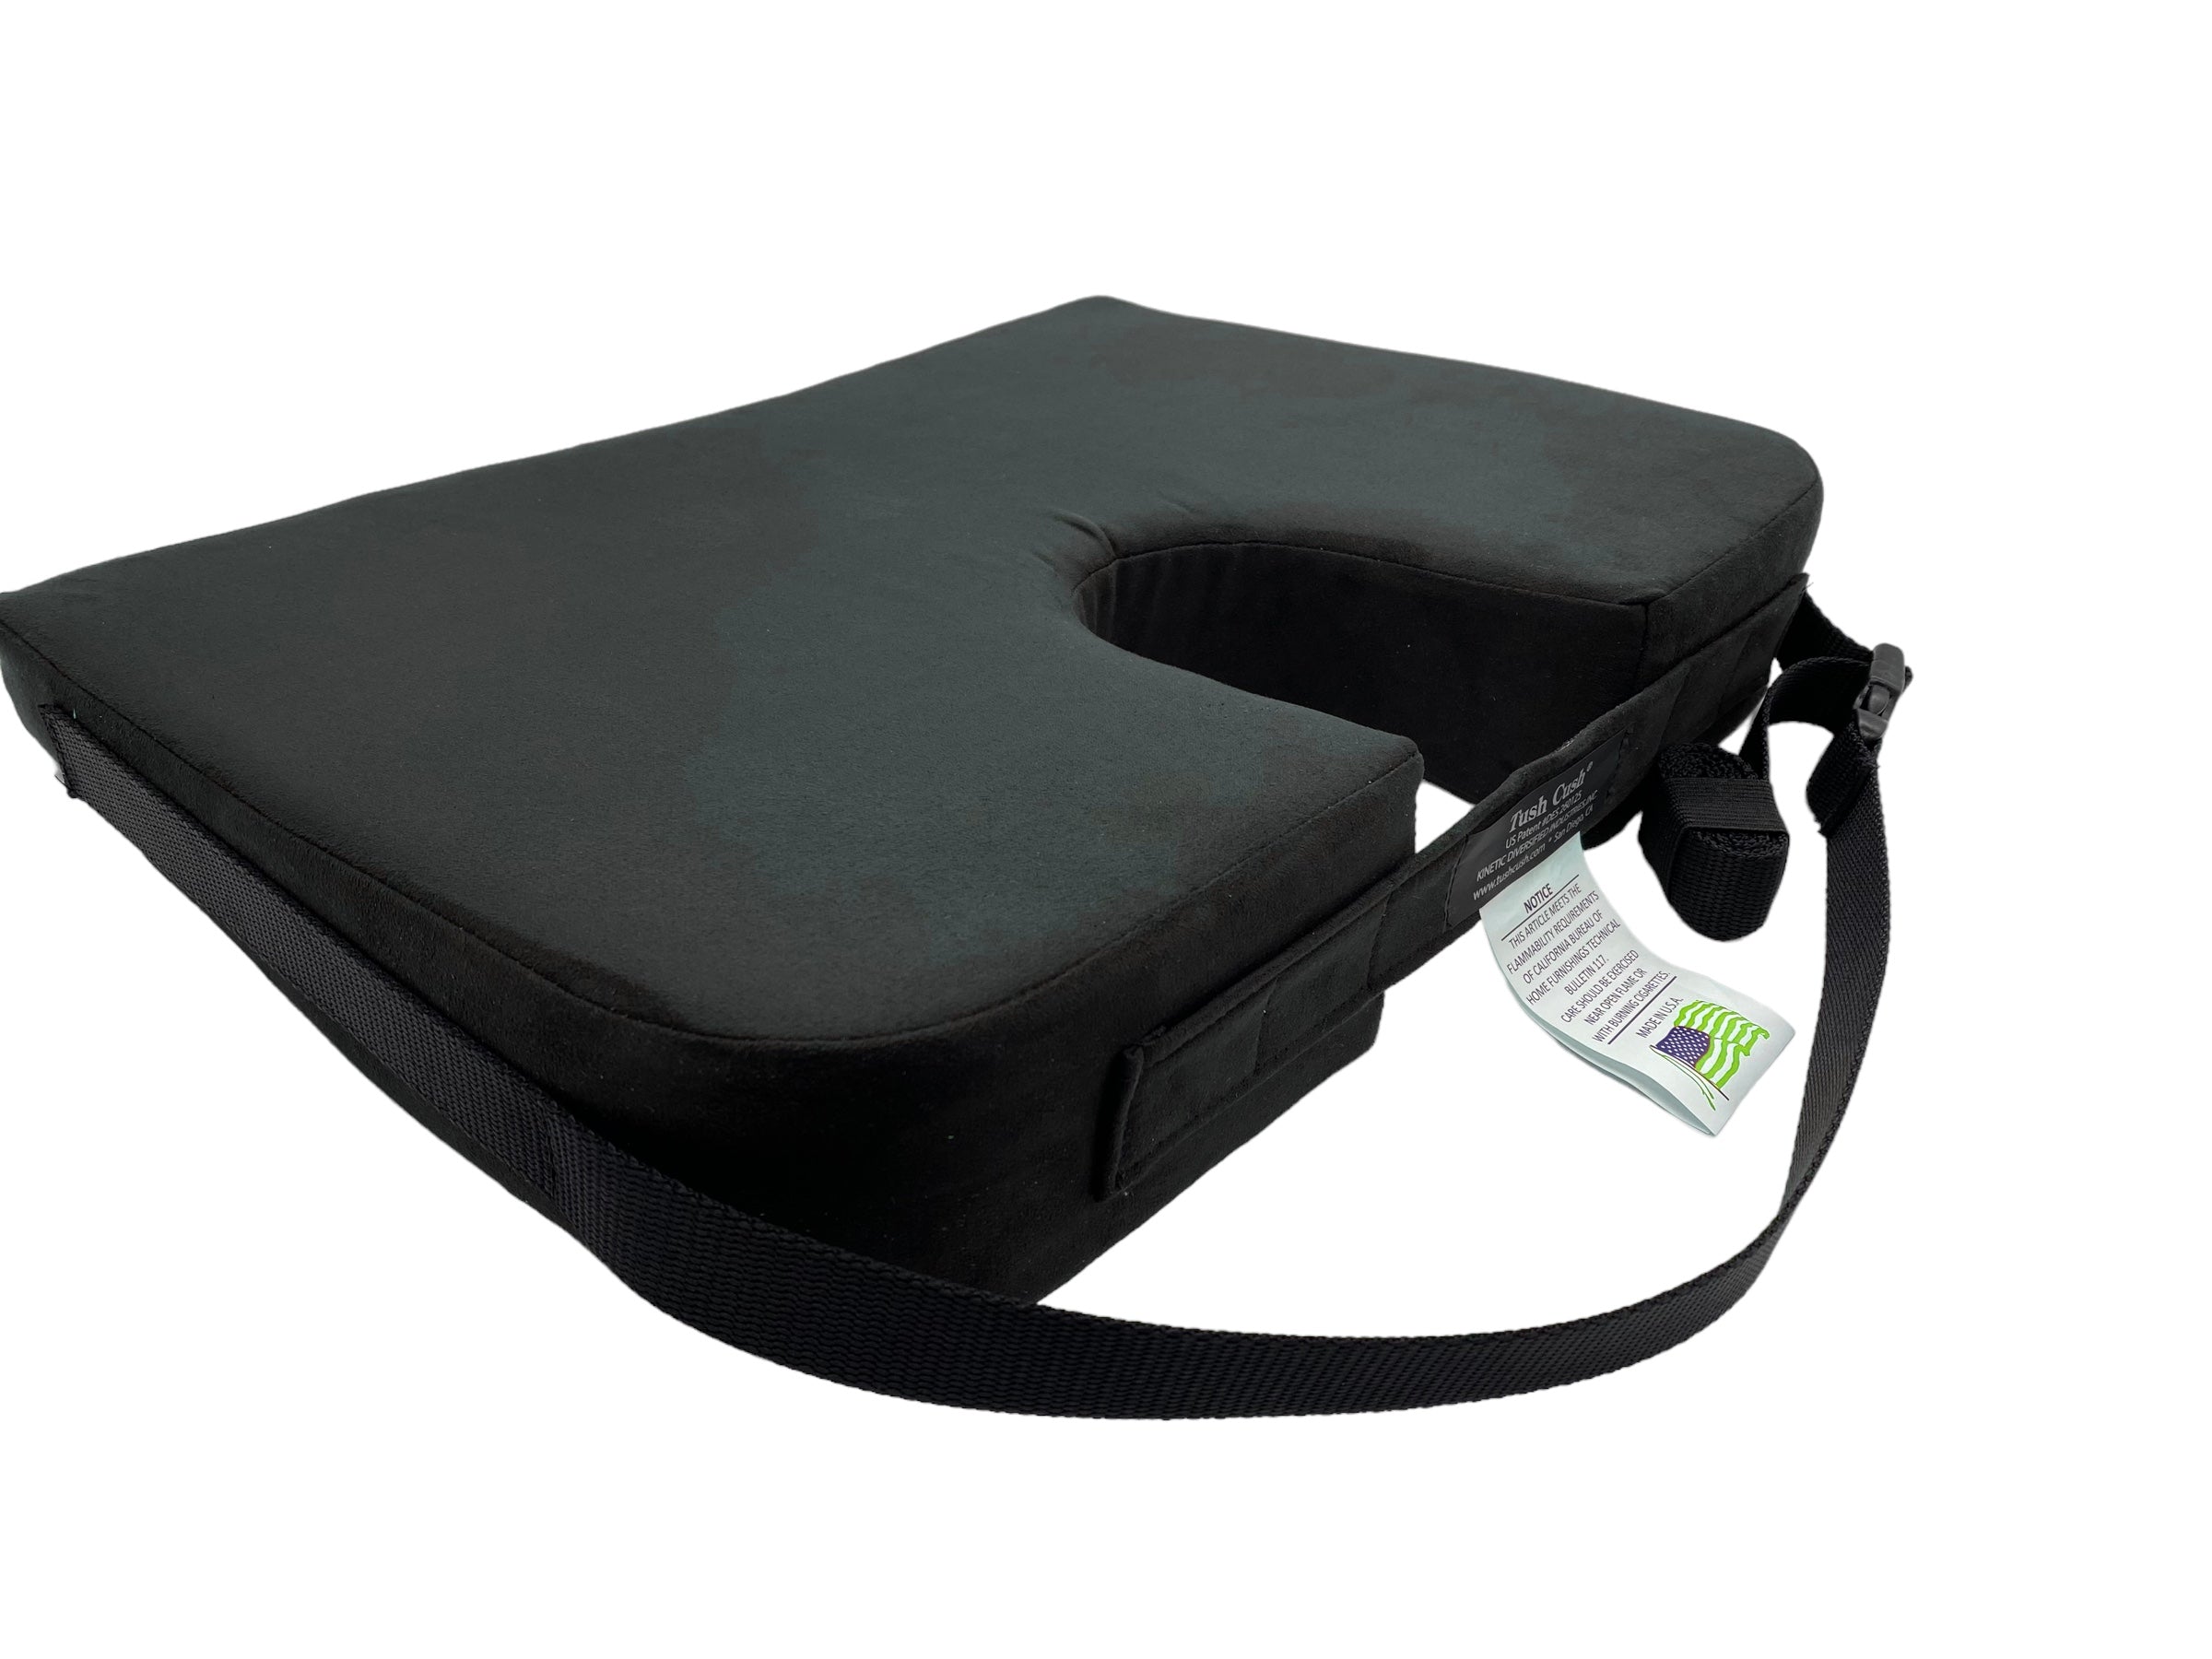 Extra Firm Original Tush Cush Orthopedic Seat Cushion Relieves Pain